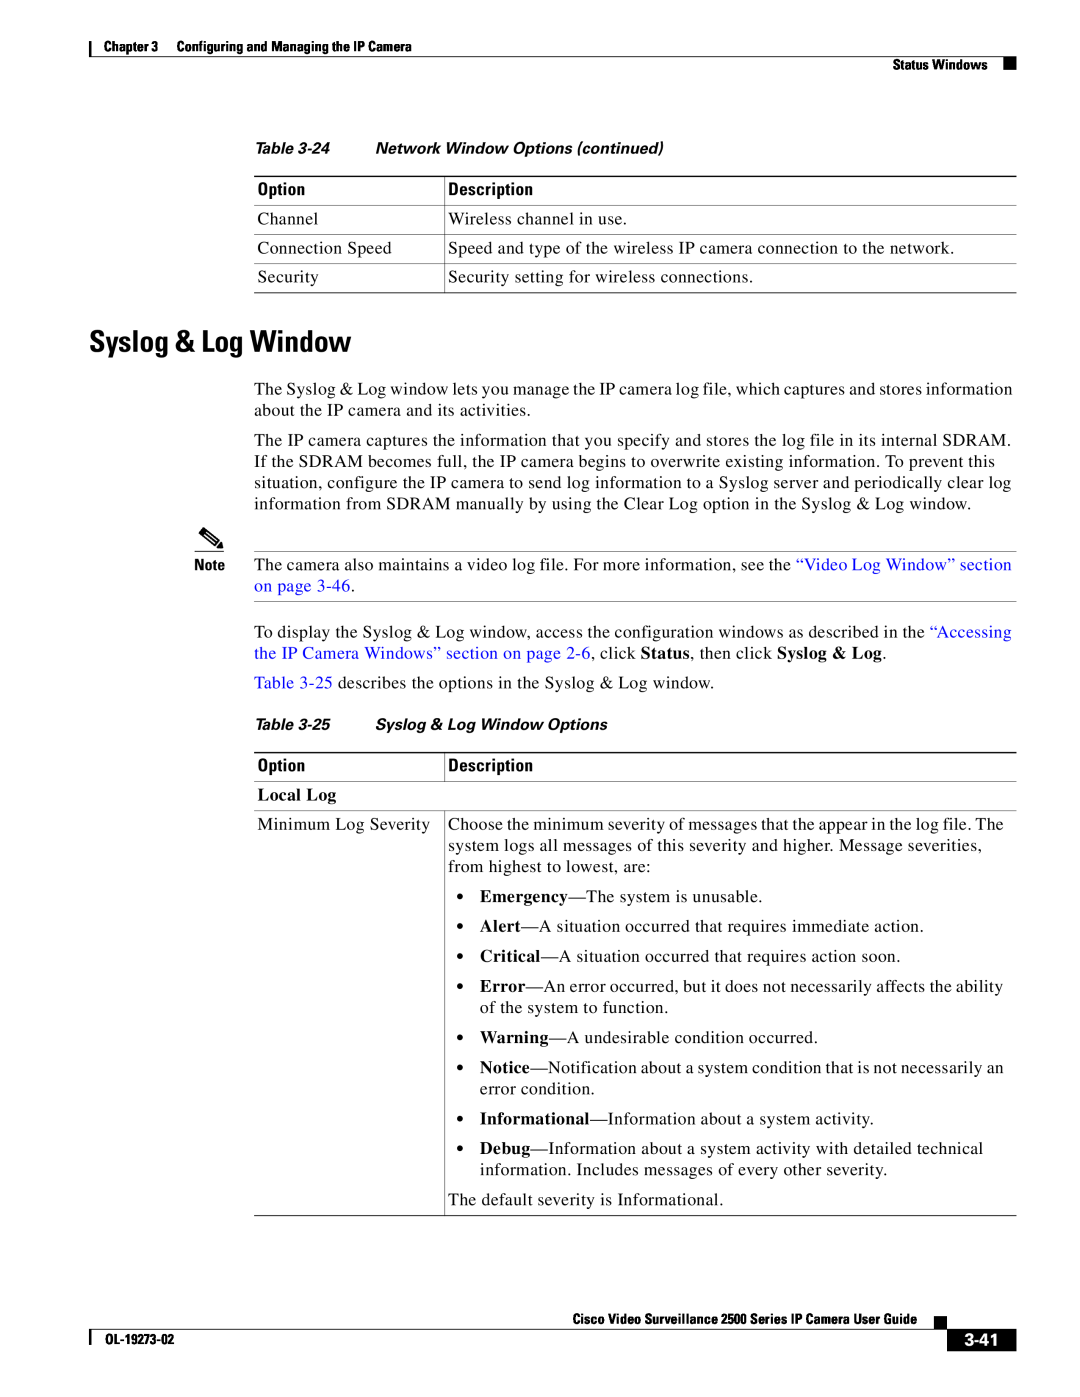 Cisco Systems CIVS-IPC-2500, 2500 Series manual Syslog & Log Window, Local Log, 3-41, Option, Description 